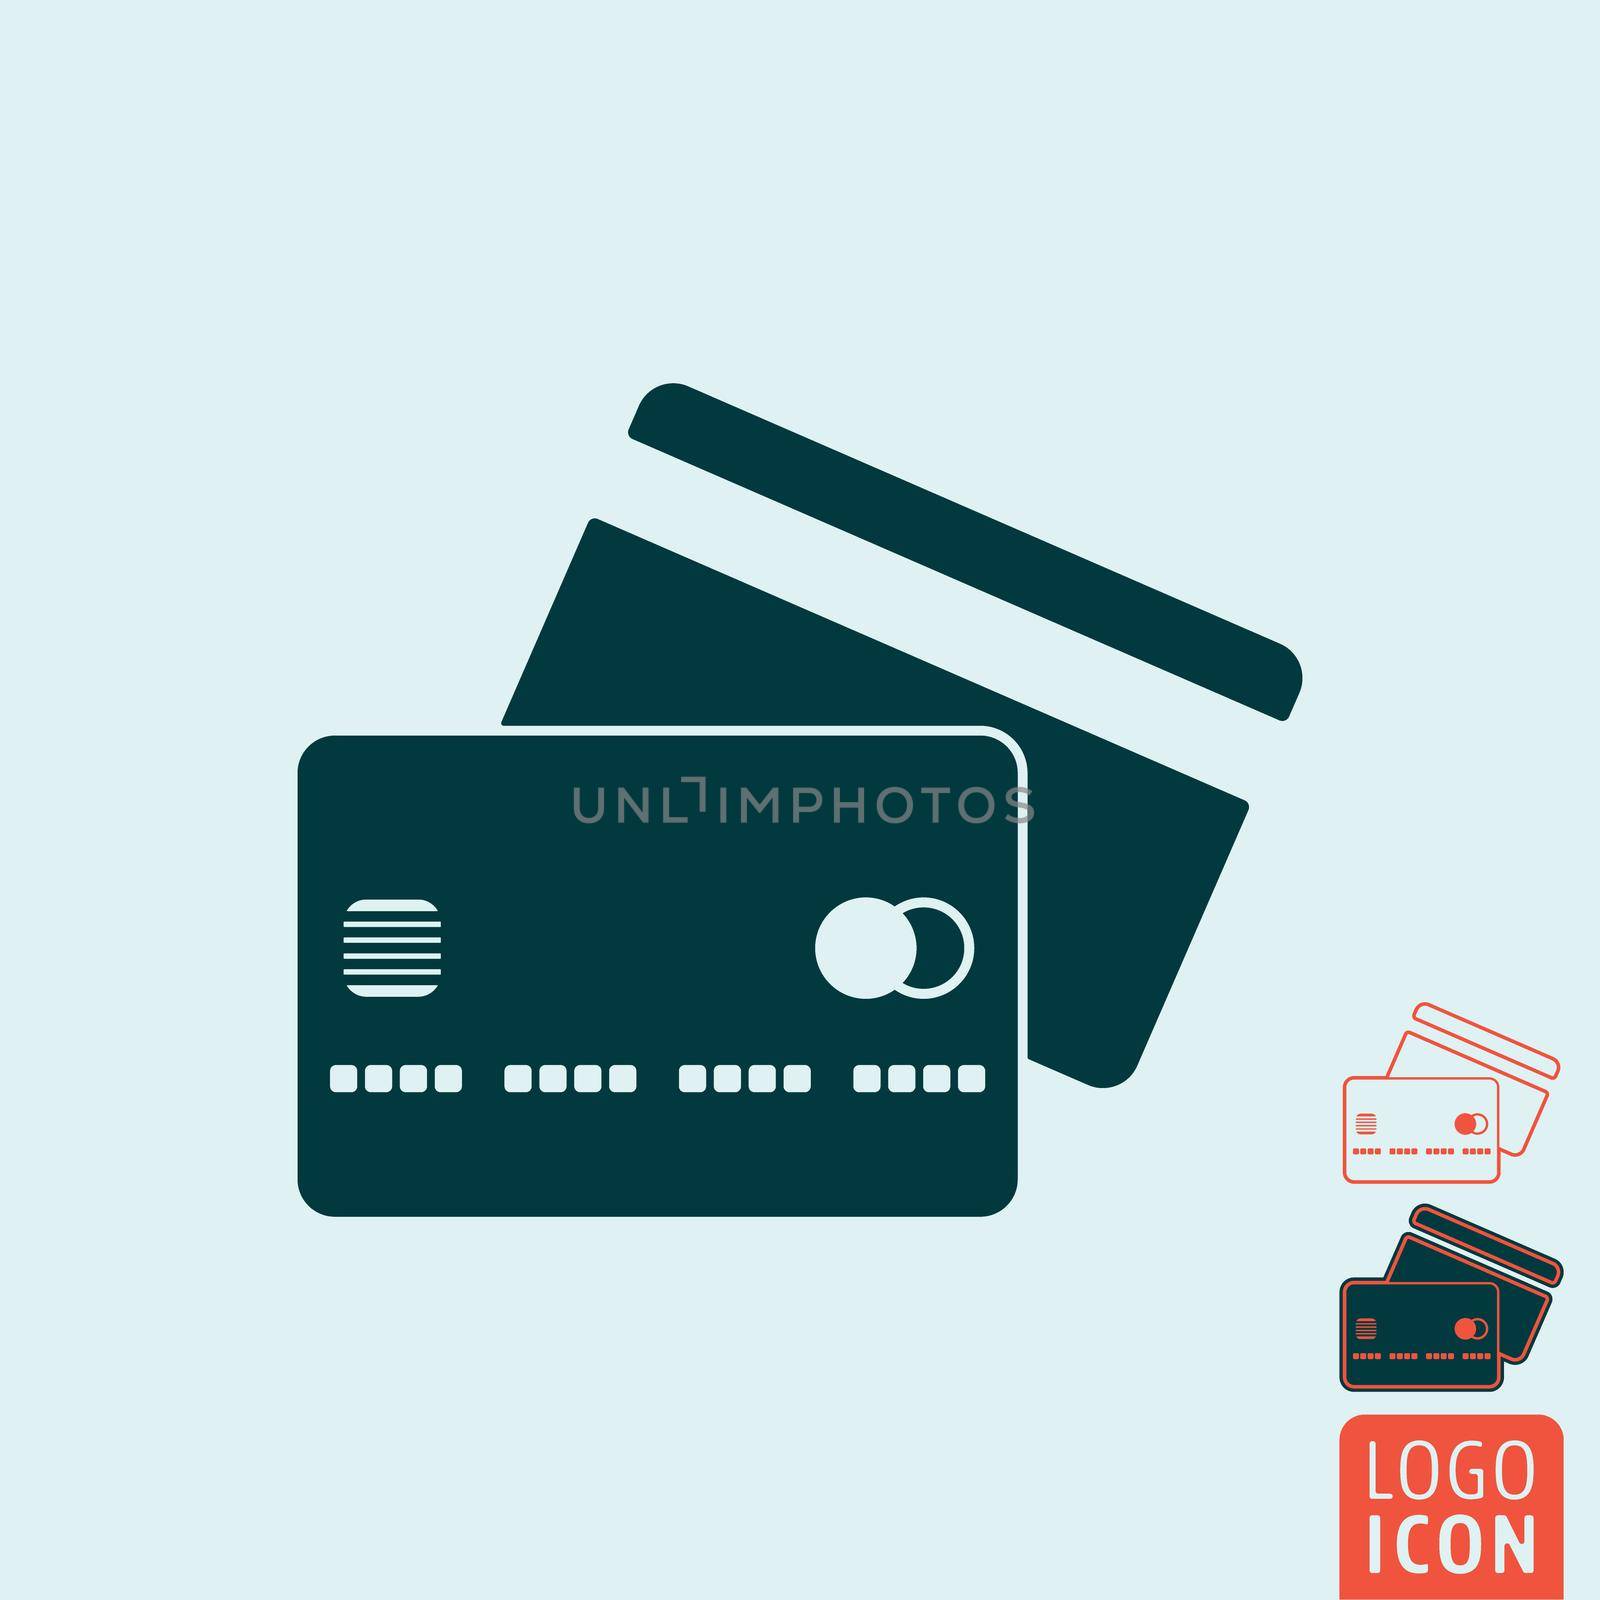 Credit card icon. Credit card symbol. Credit cards icon isolated, minimal design. Vector illustration